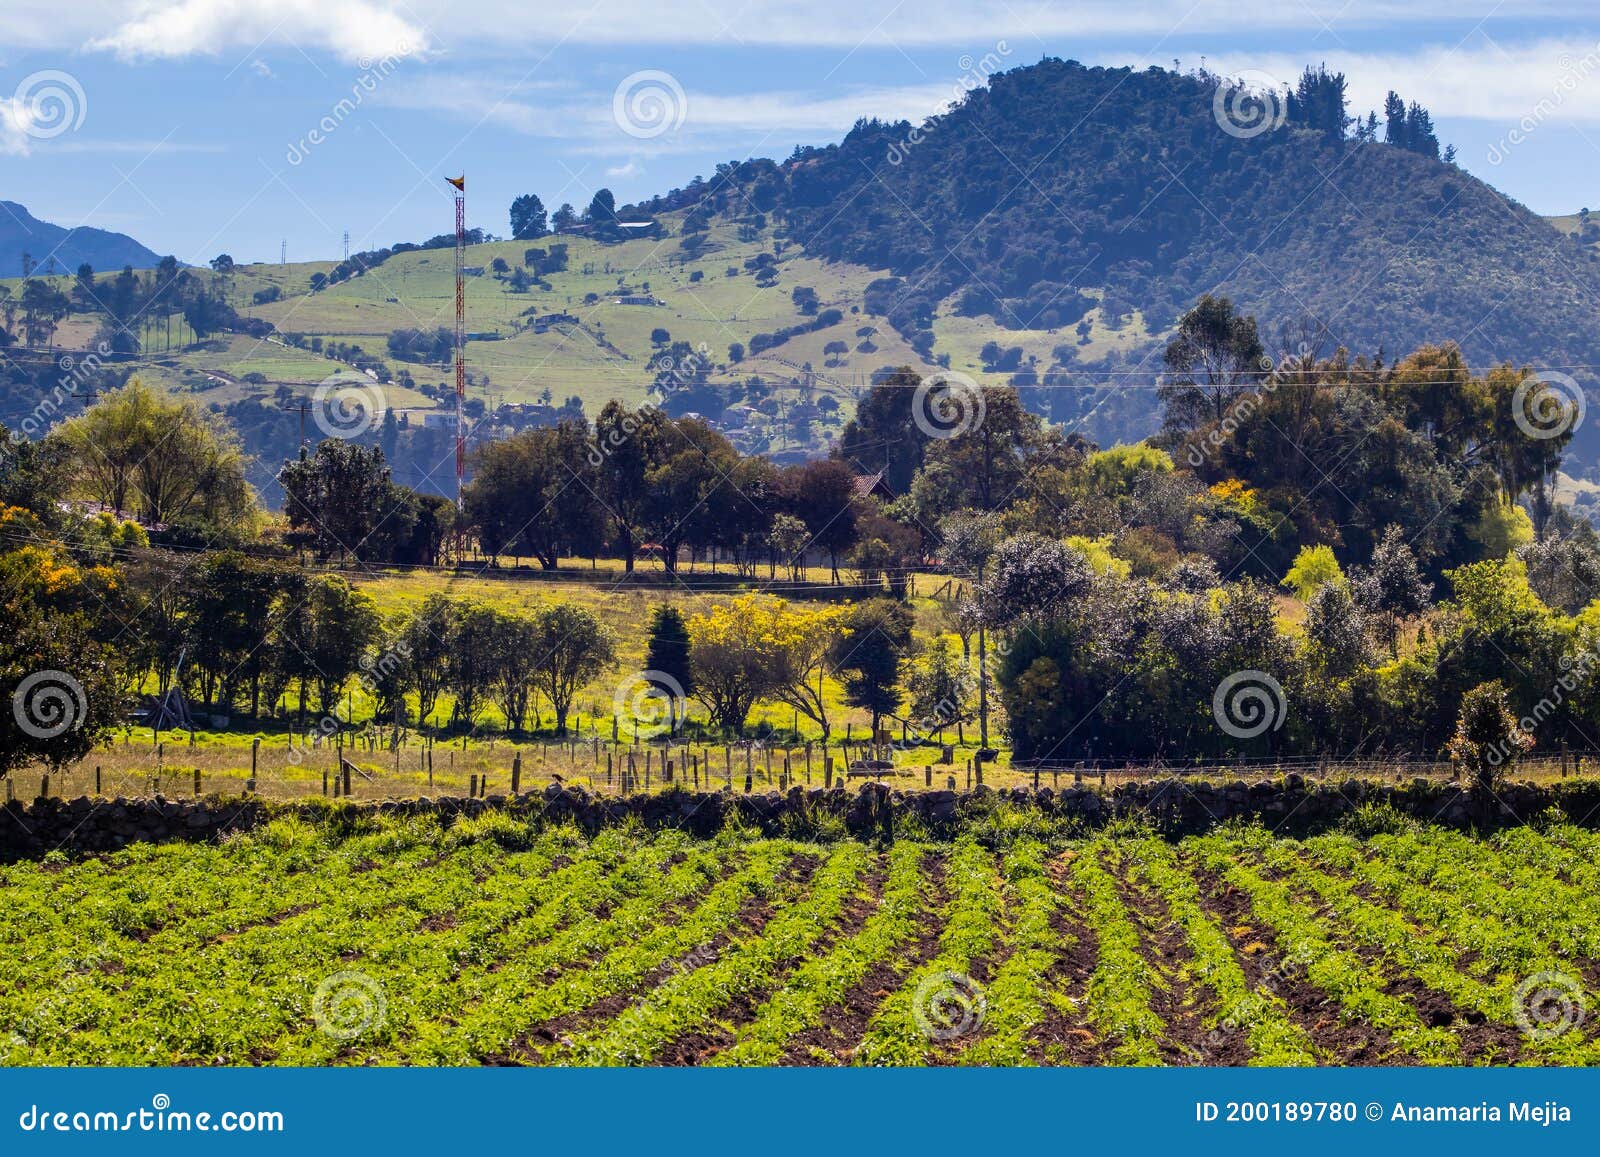 typical potato field at la calera municipality at the cundinamarca region in colombia